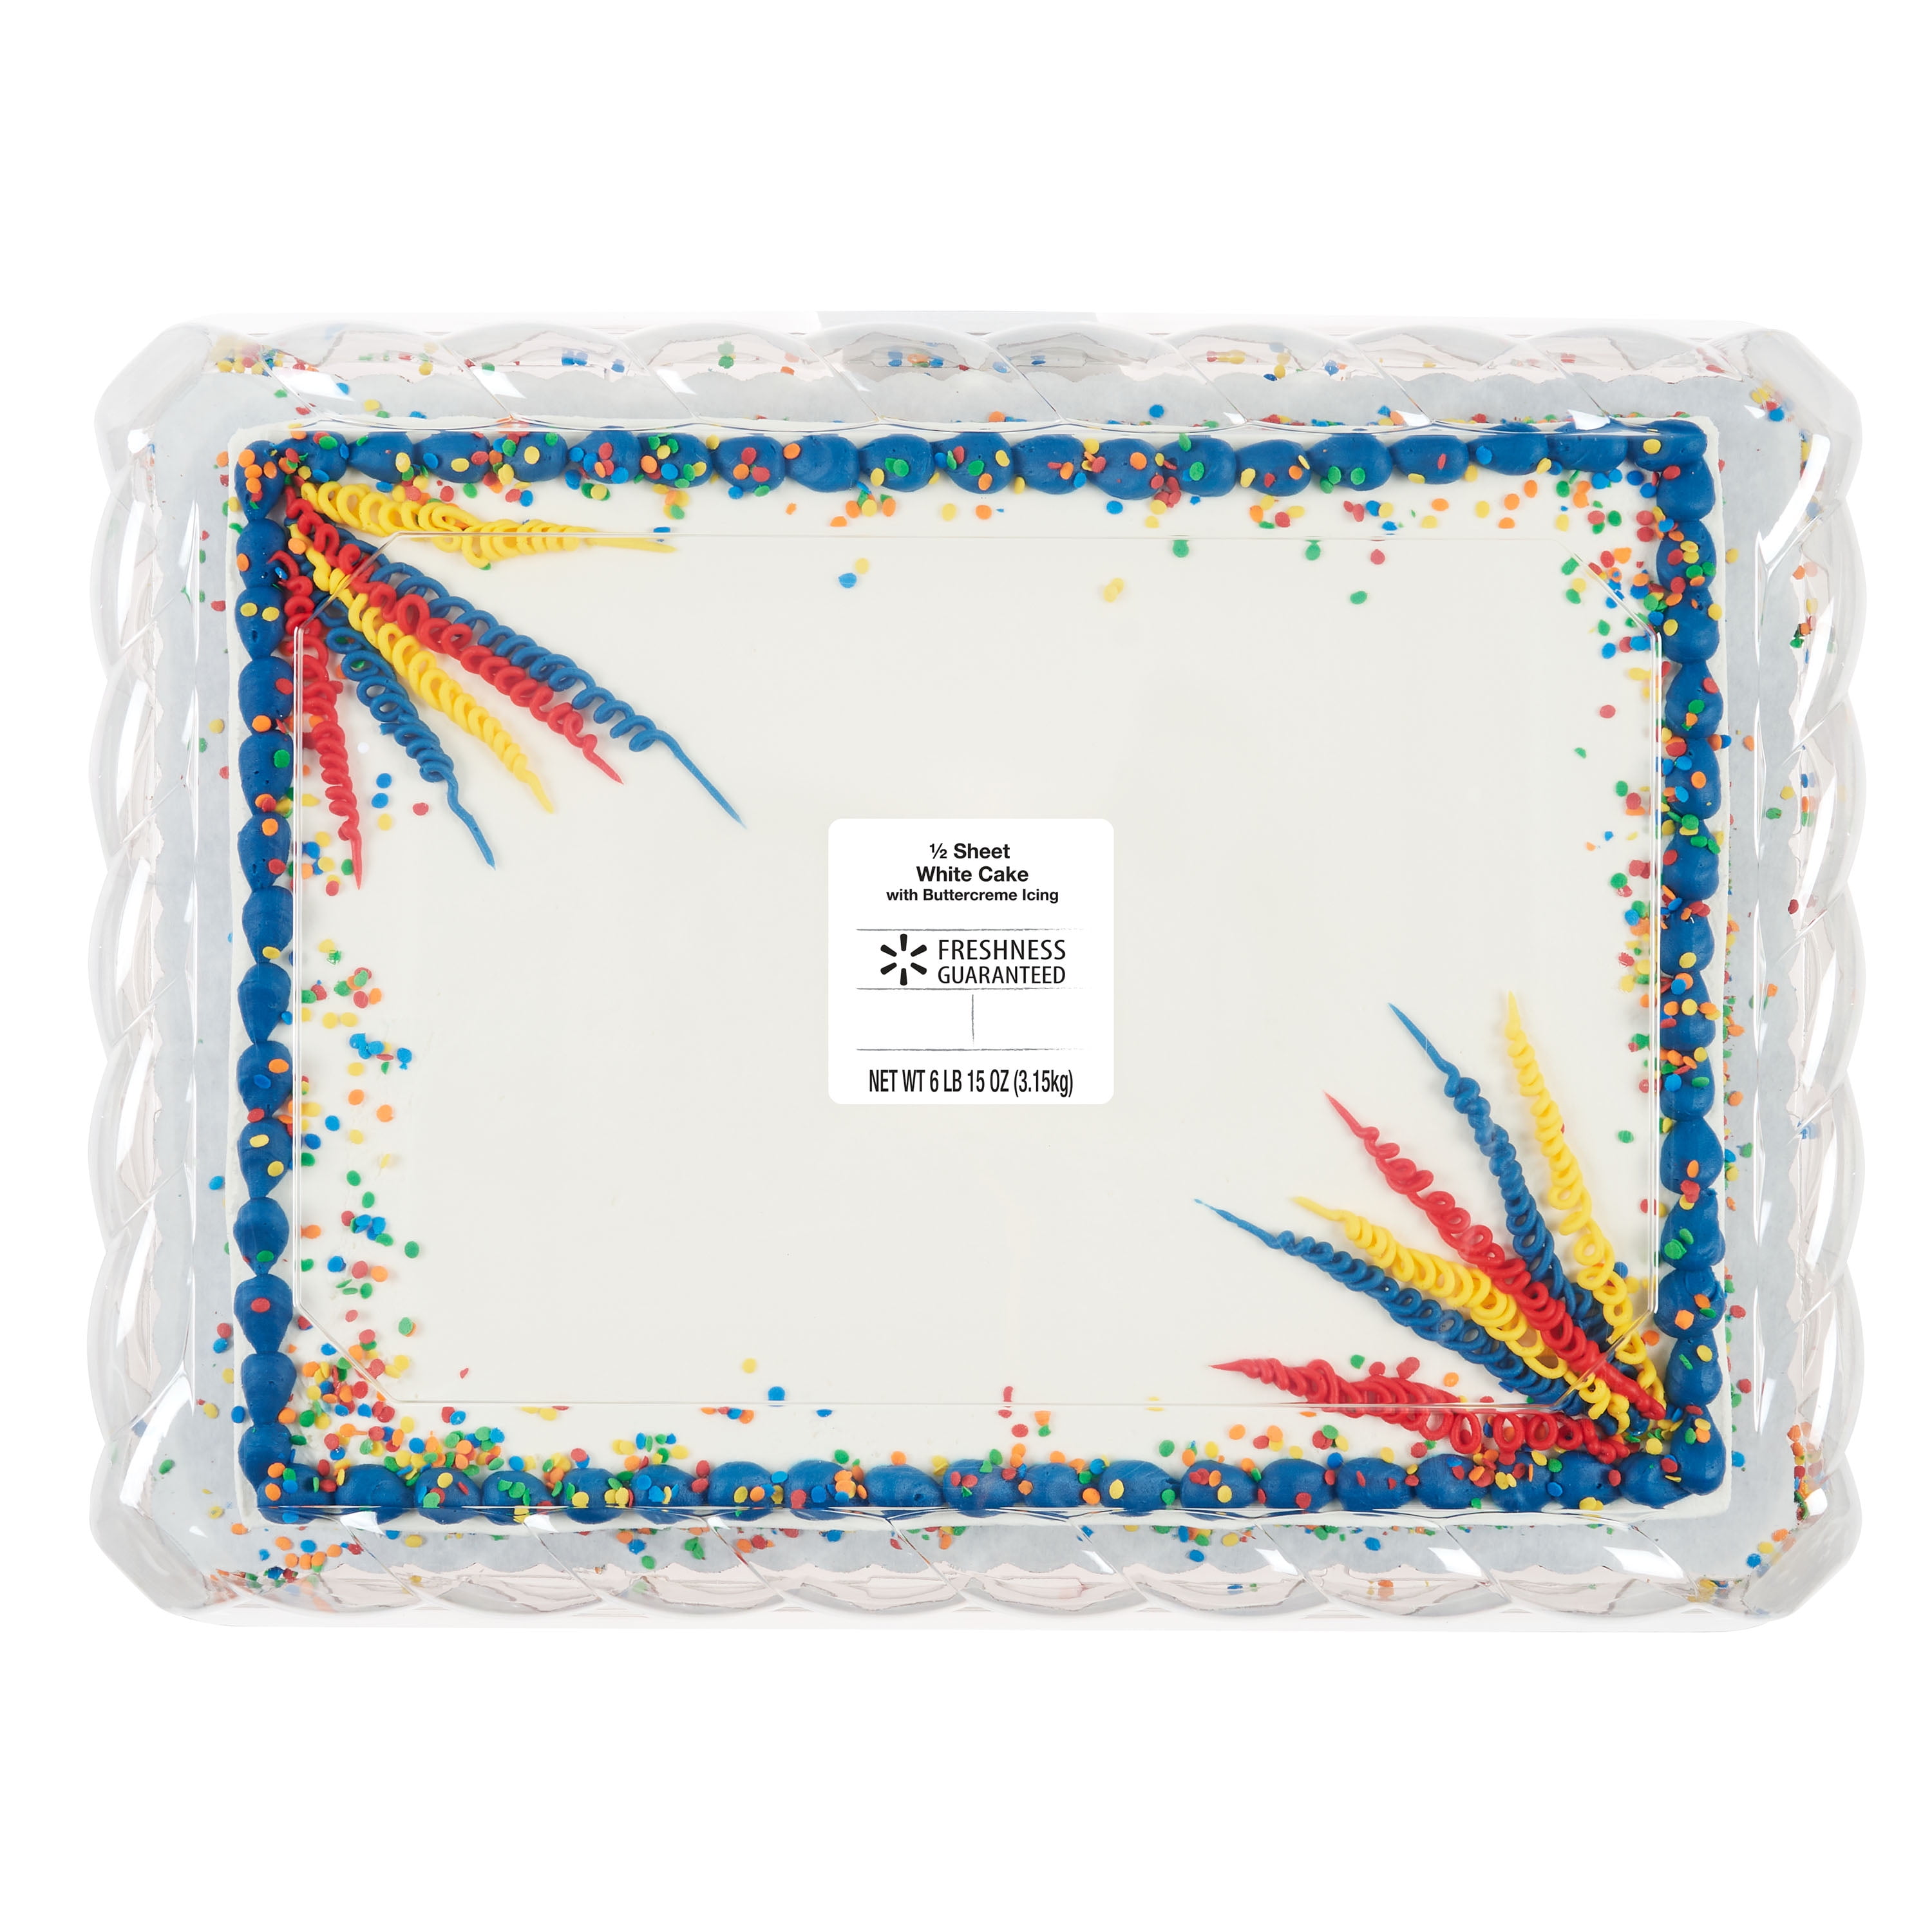 Freshness Guaranteed 1 2 Sheet White Cake With Buttercreme 7lb 4oz Walmart Com Walmart Com